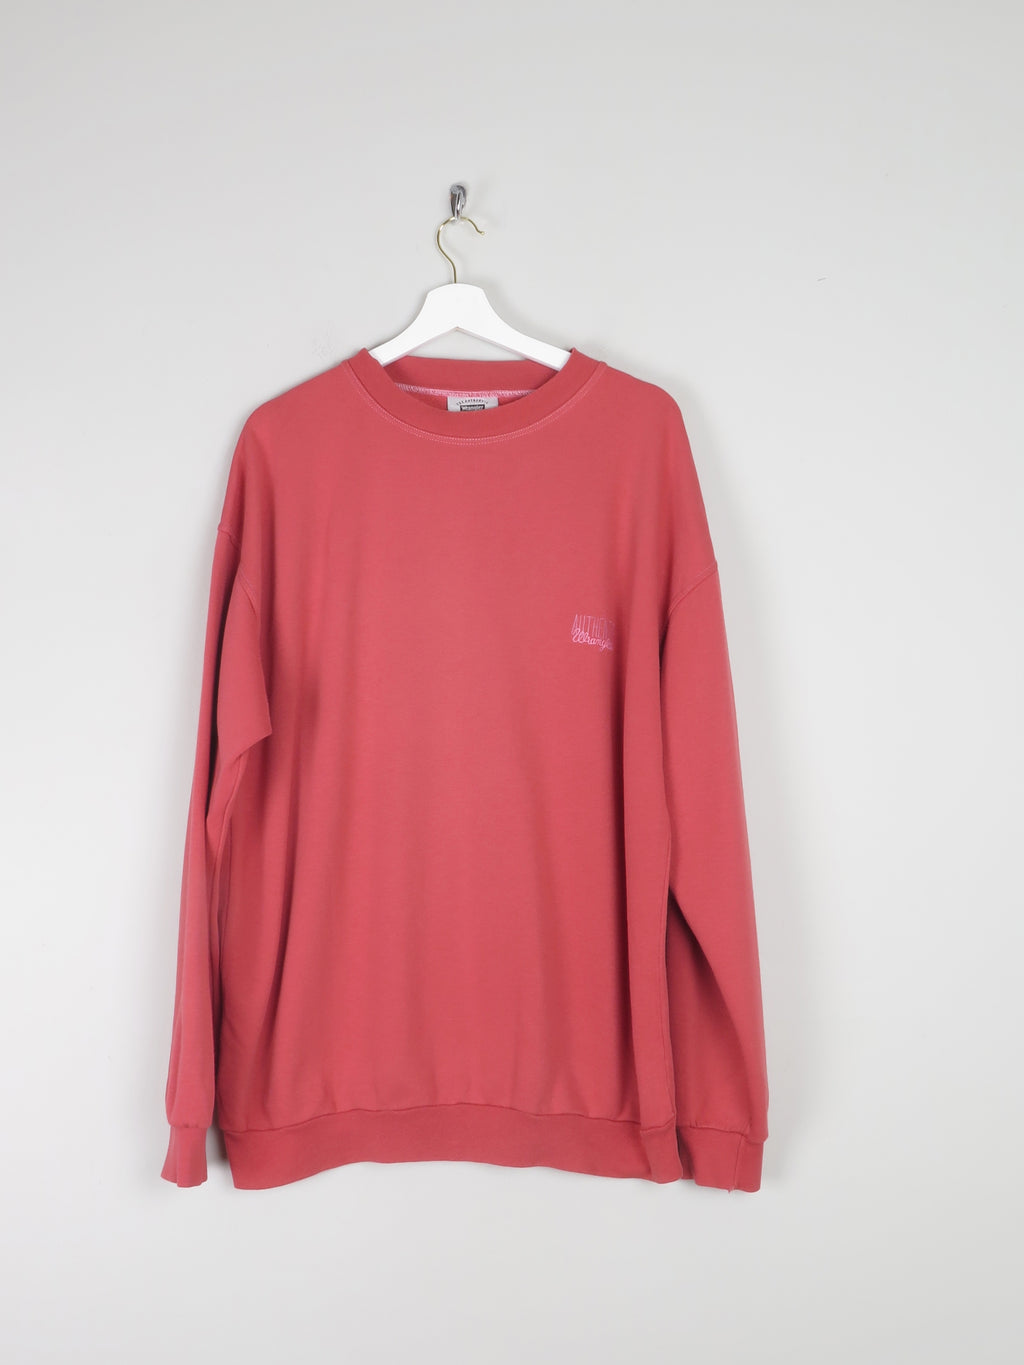 Men's Vintage Wrangler Coral Sweatshirt L/XL